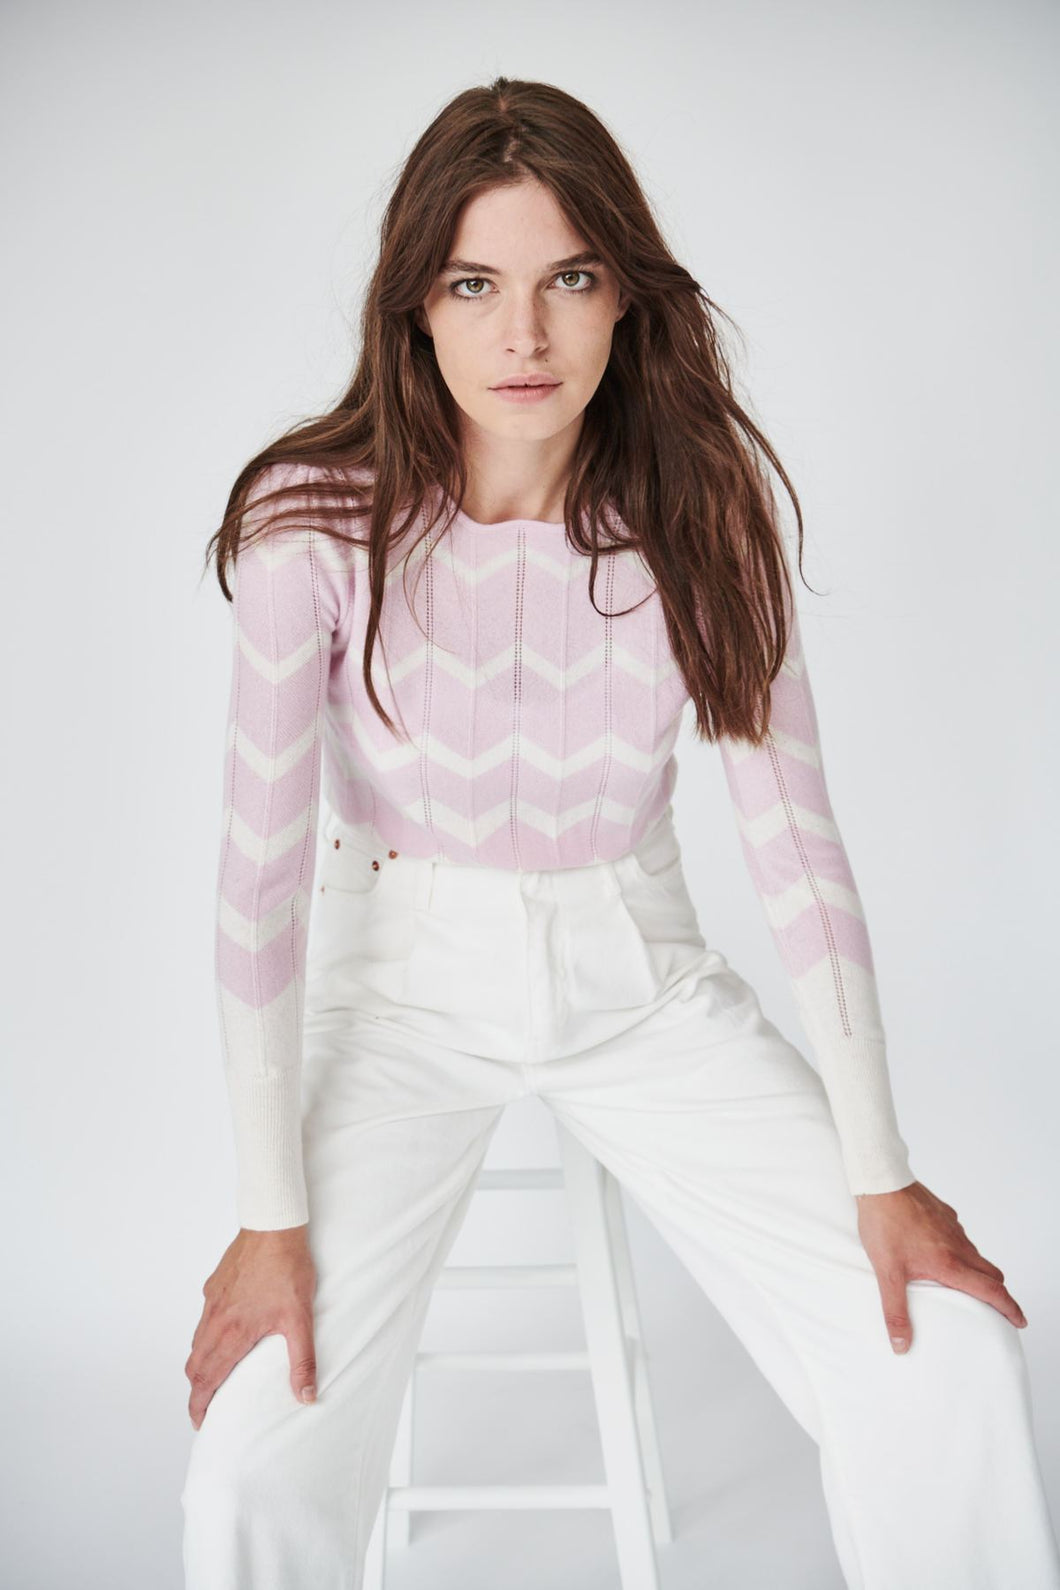 Jessie Knit in Pink and White Chevron